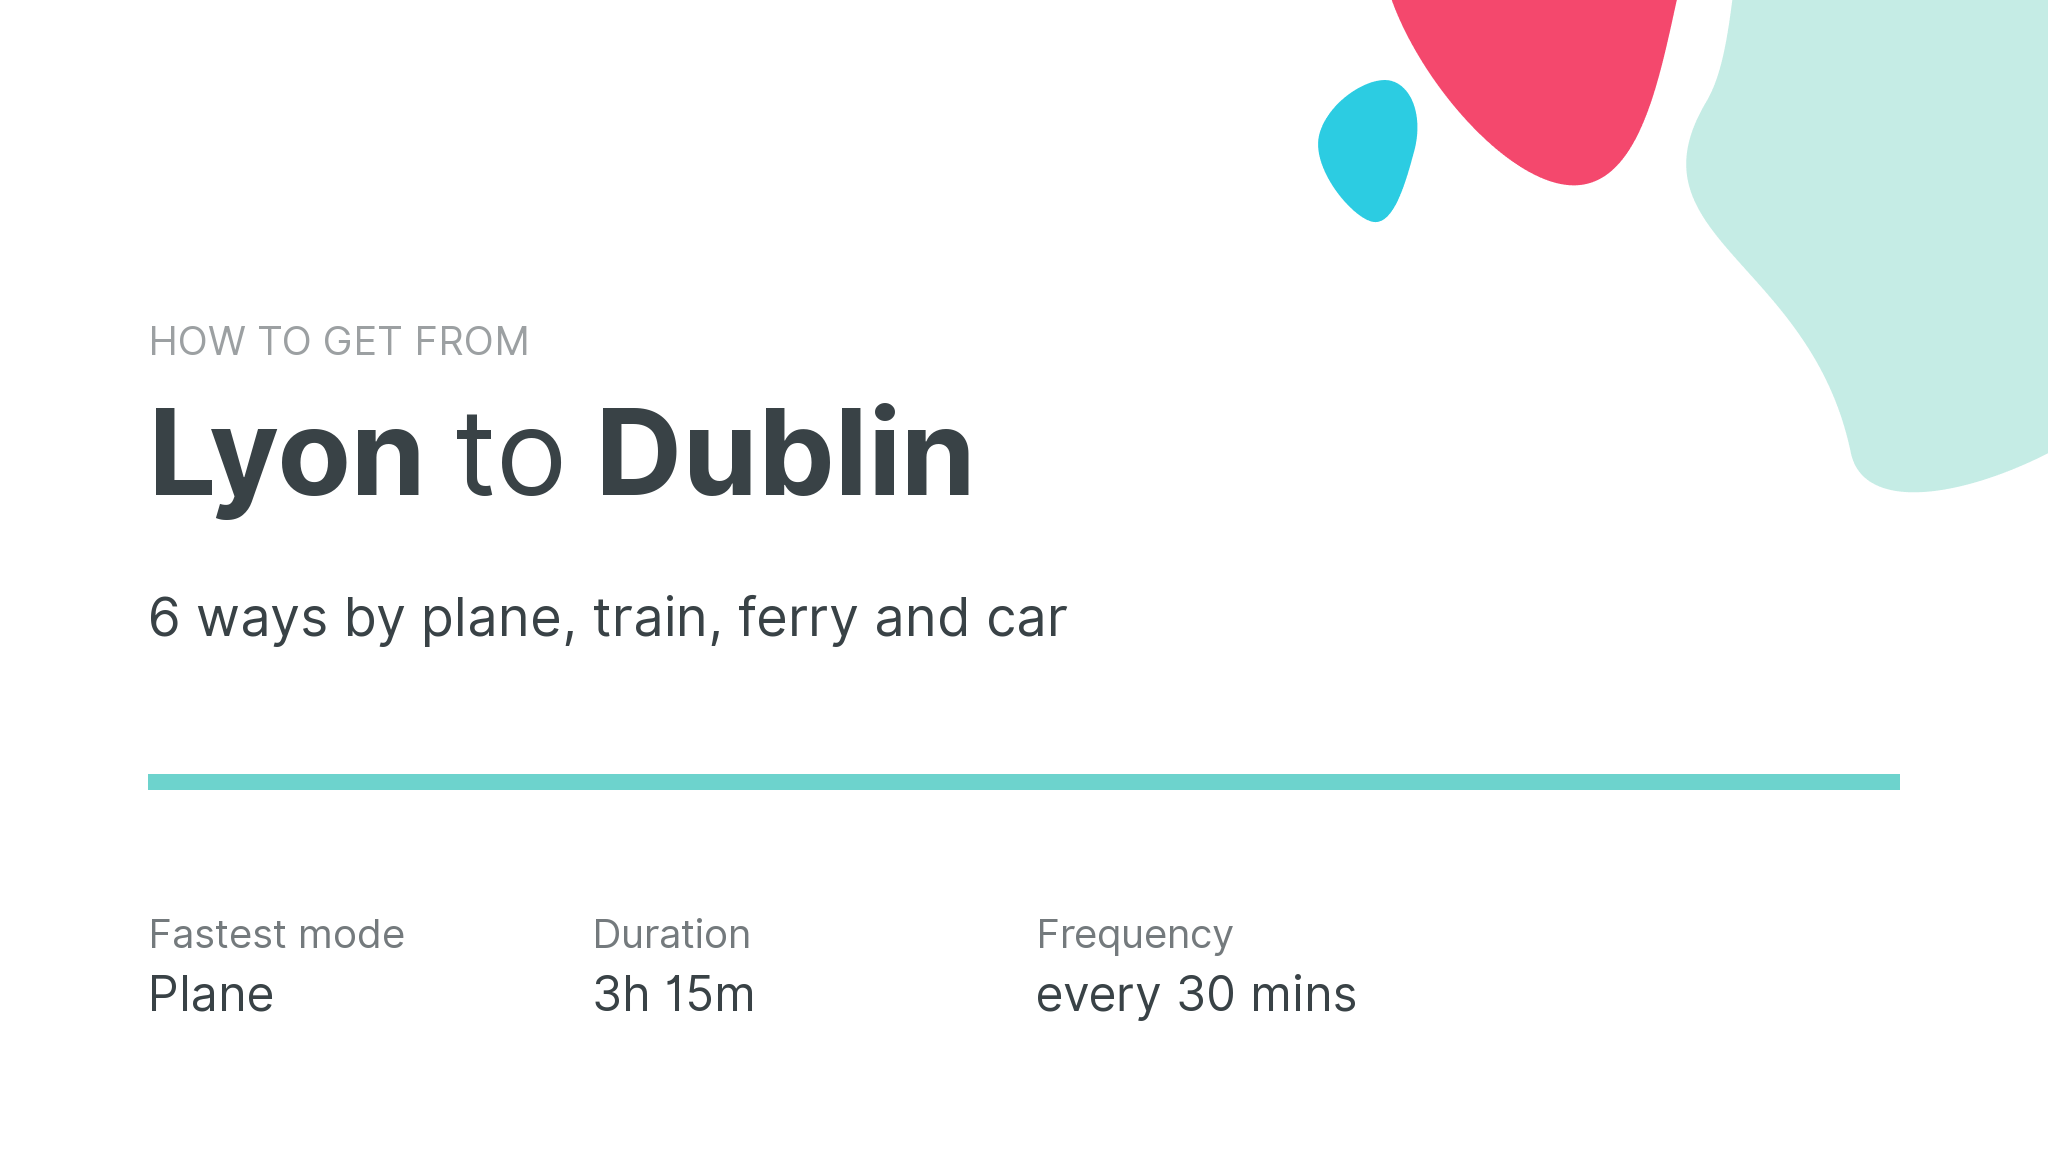 How do I get from Lyon to Dublin